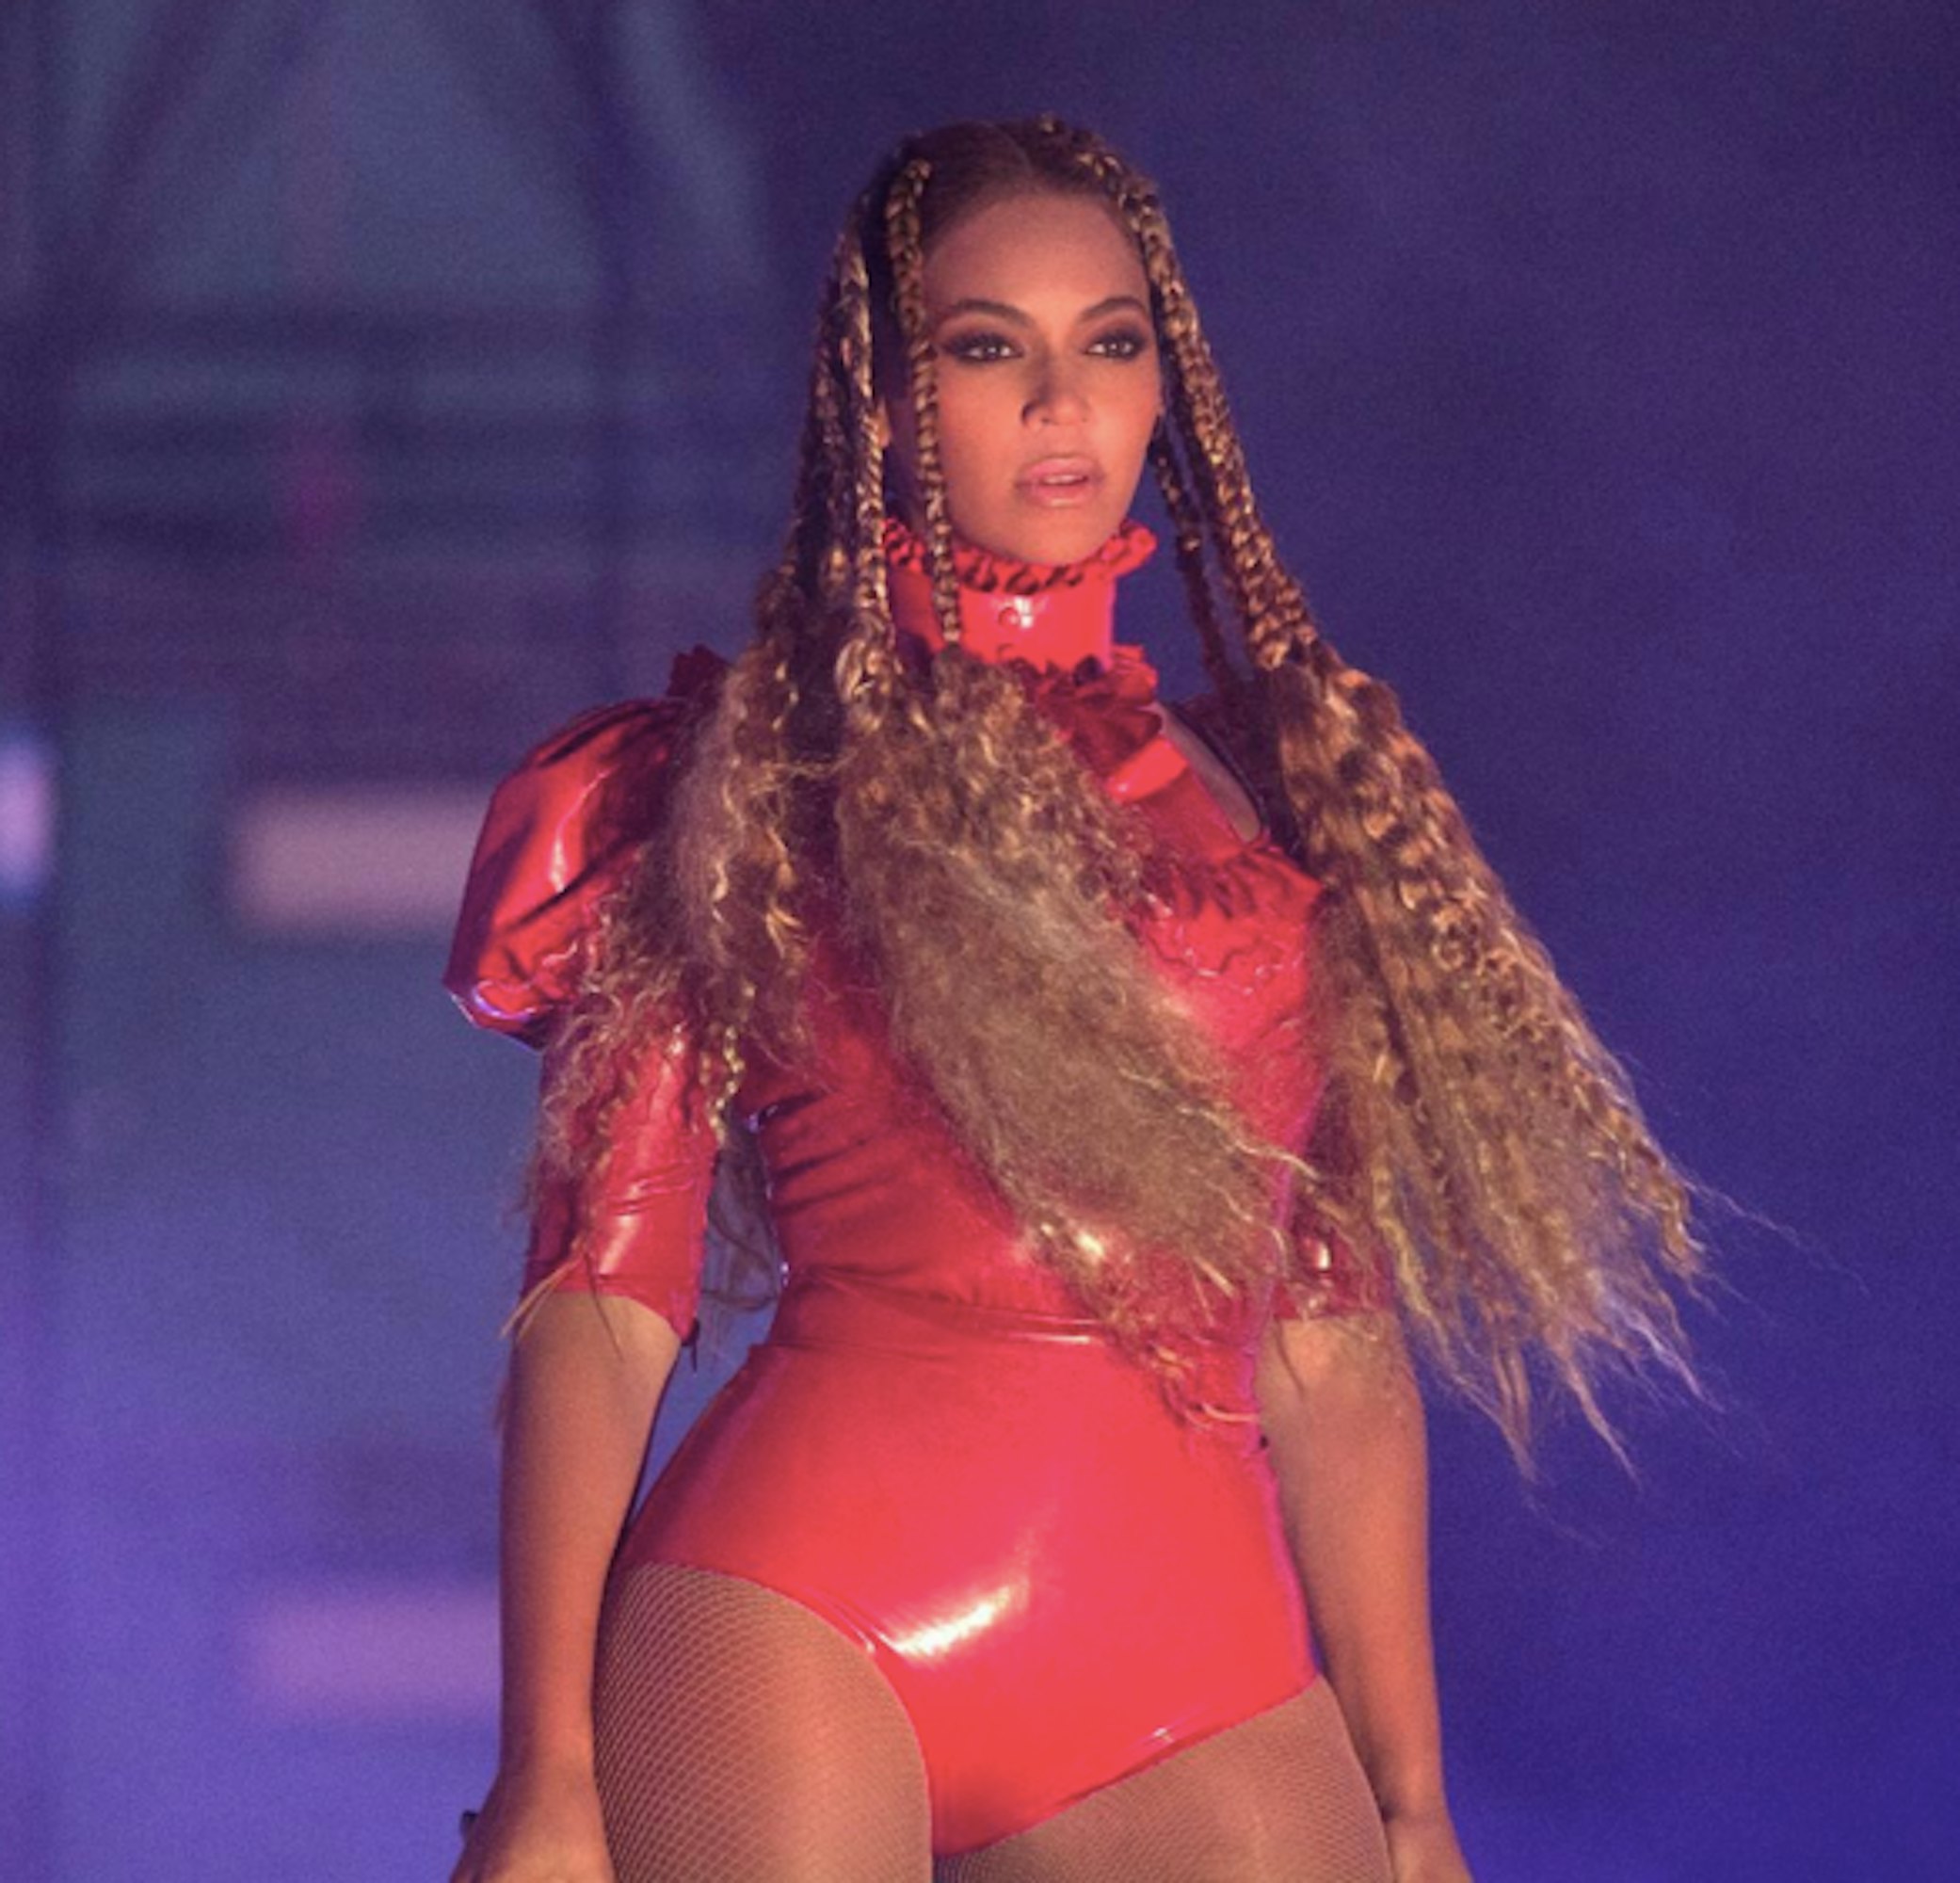 Beyoncé Just Endorsed The Women’s March On Washington